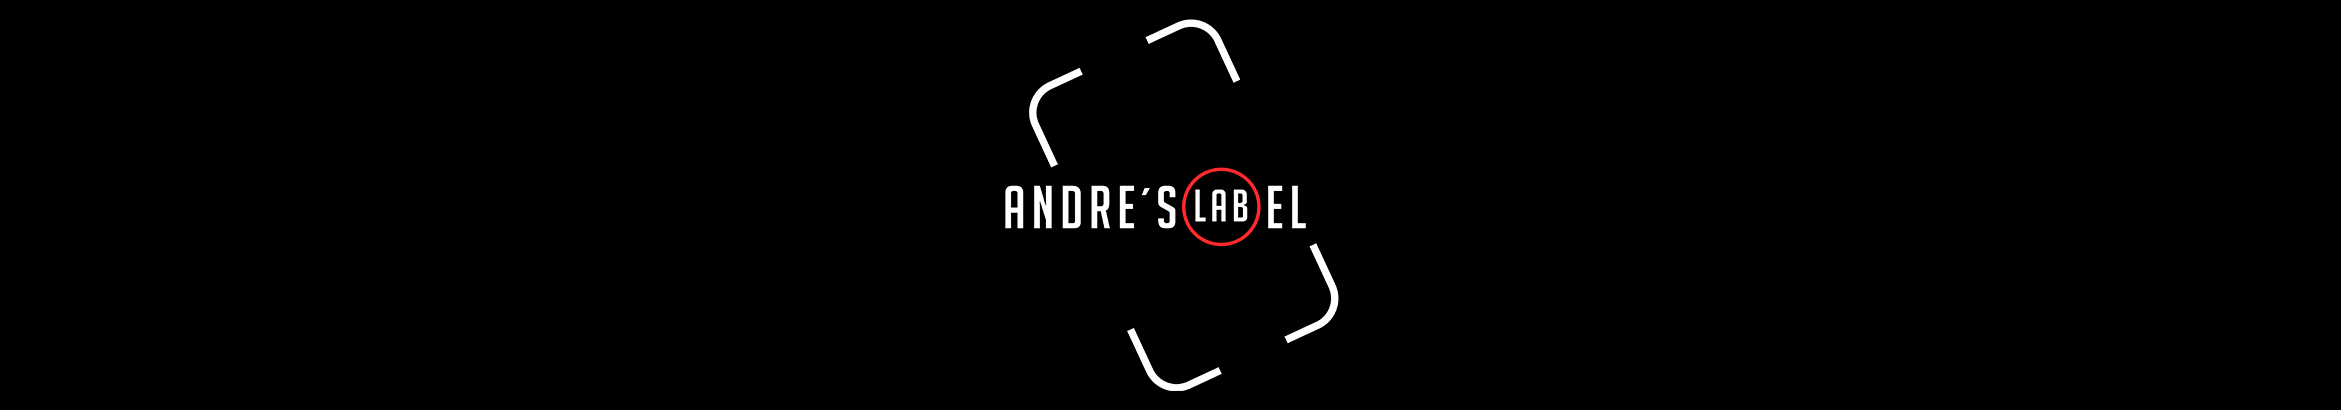 André Rocha's profile banner